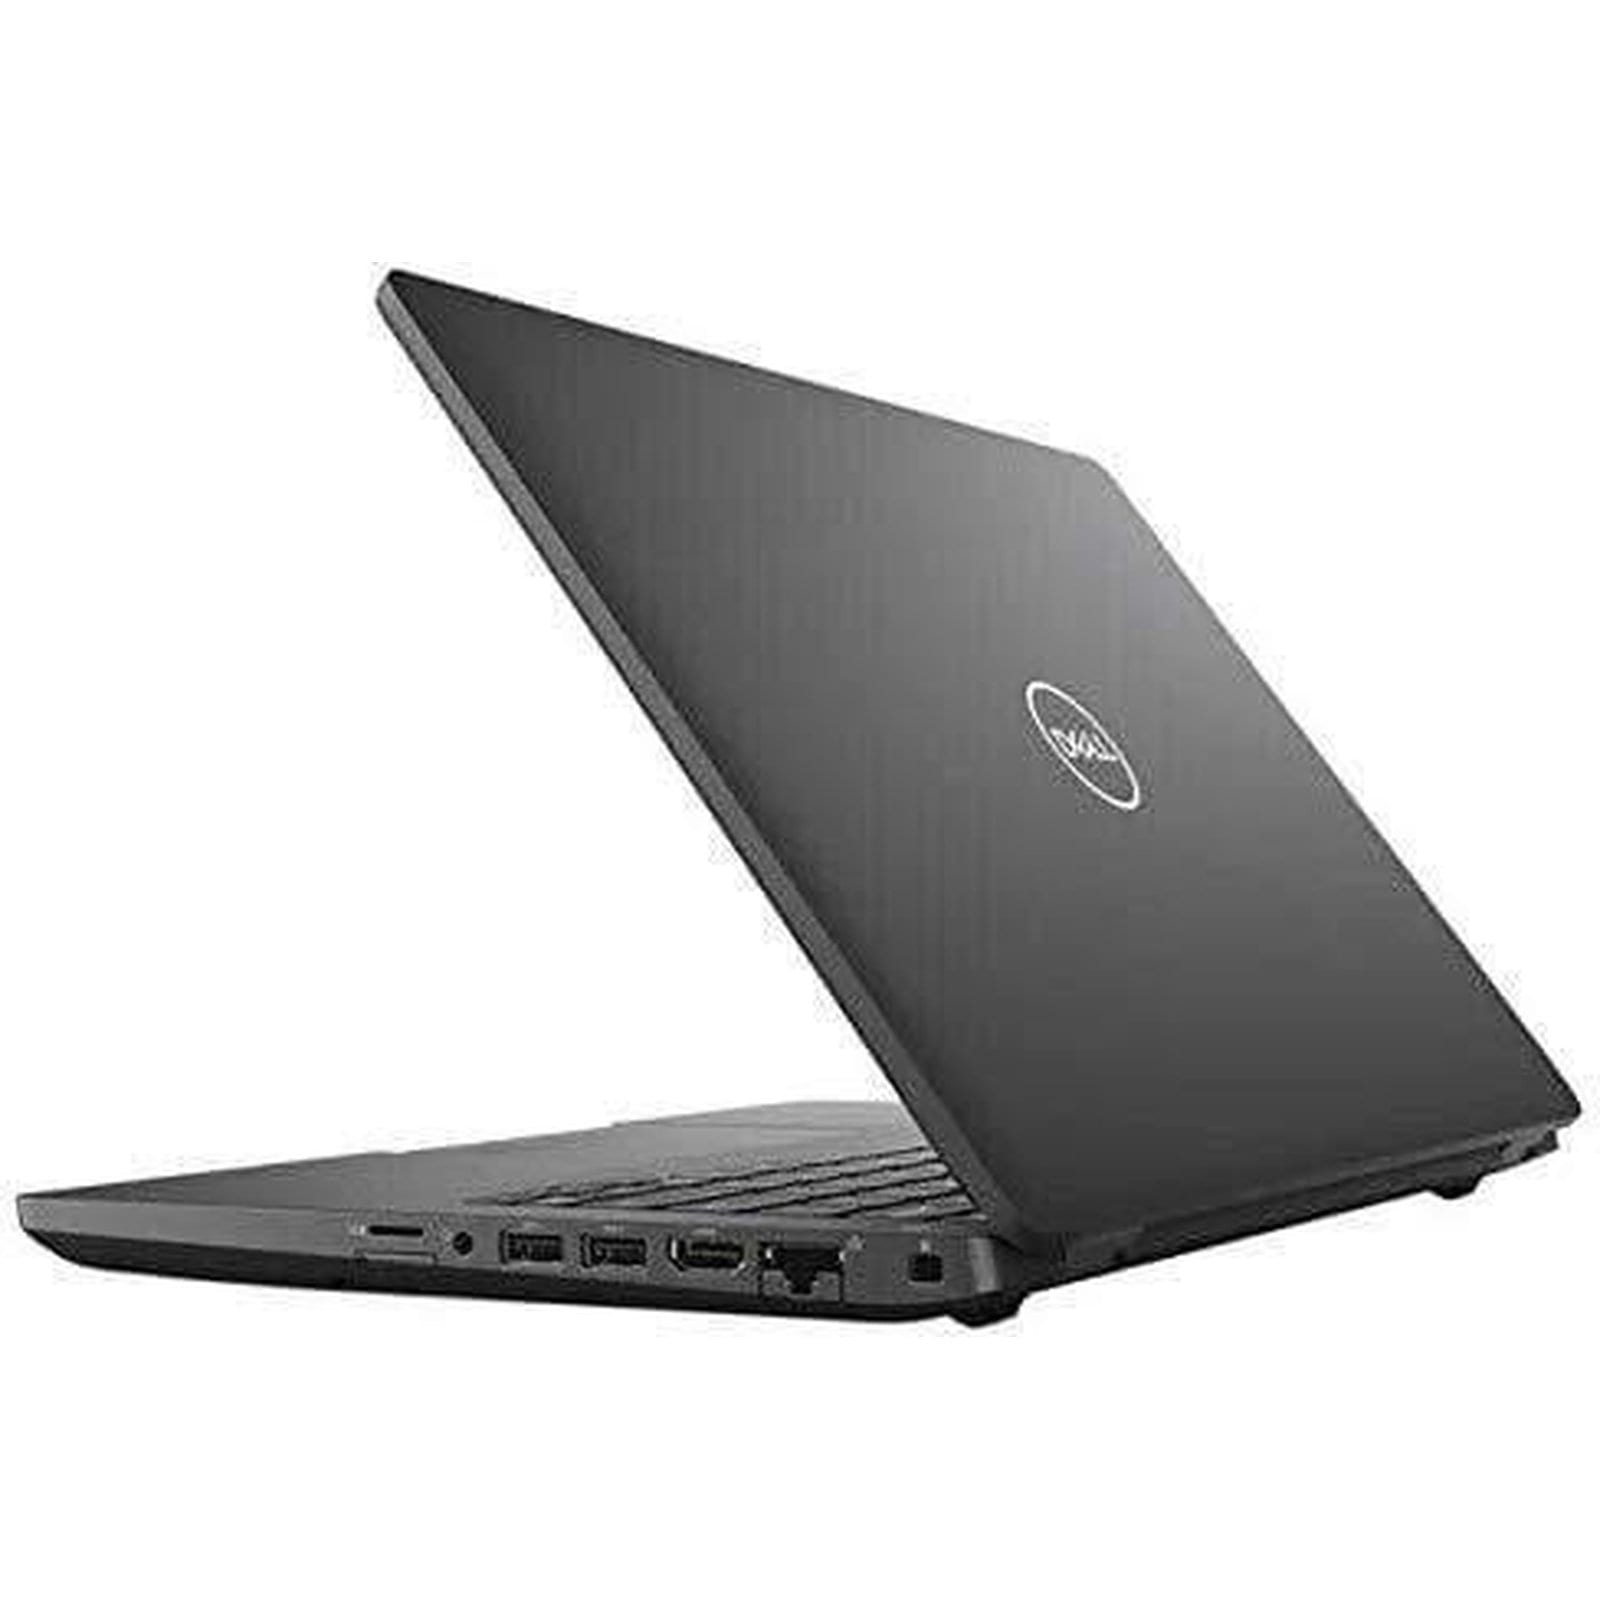 BSB-EDT6WQSCZCI3DLPZ-REF-REF-LAP-DL 2019 Dell Latitude 5300 Laptop 13.3" - i7 - i7-8665U - Quad Core 4.8Ghz - 256GB SSD - 8GB RAM - 1920x1080 FHD - Windows 10 Pro Black